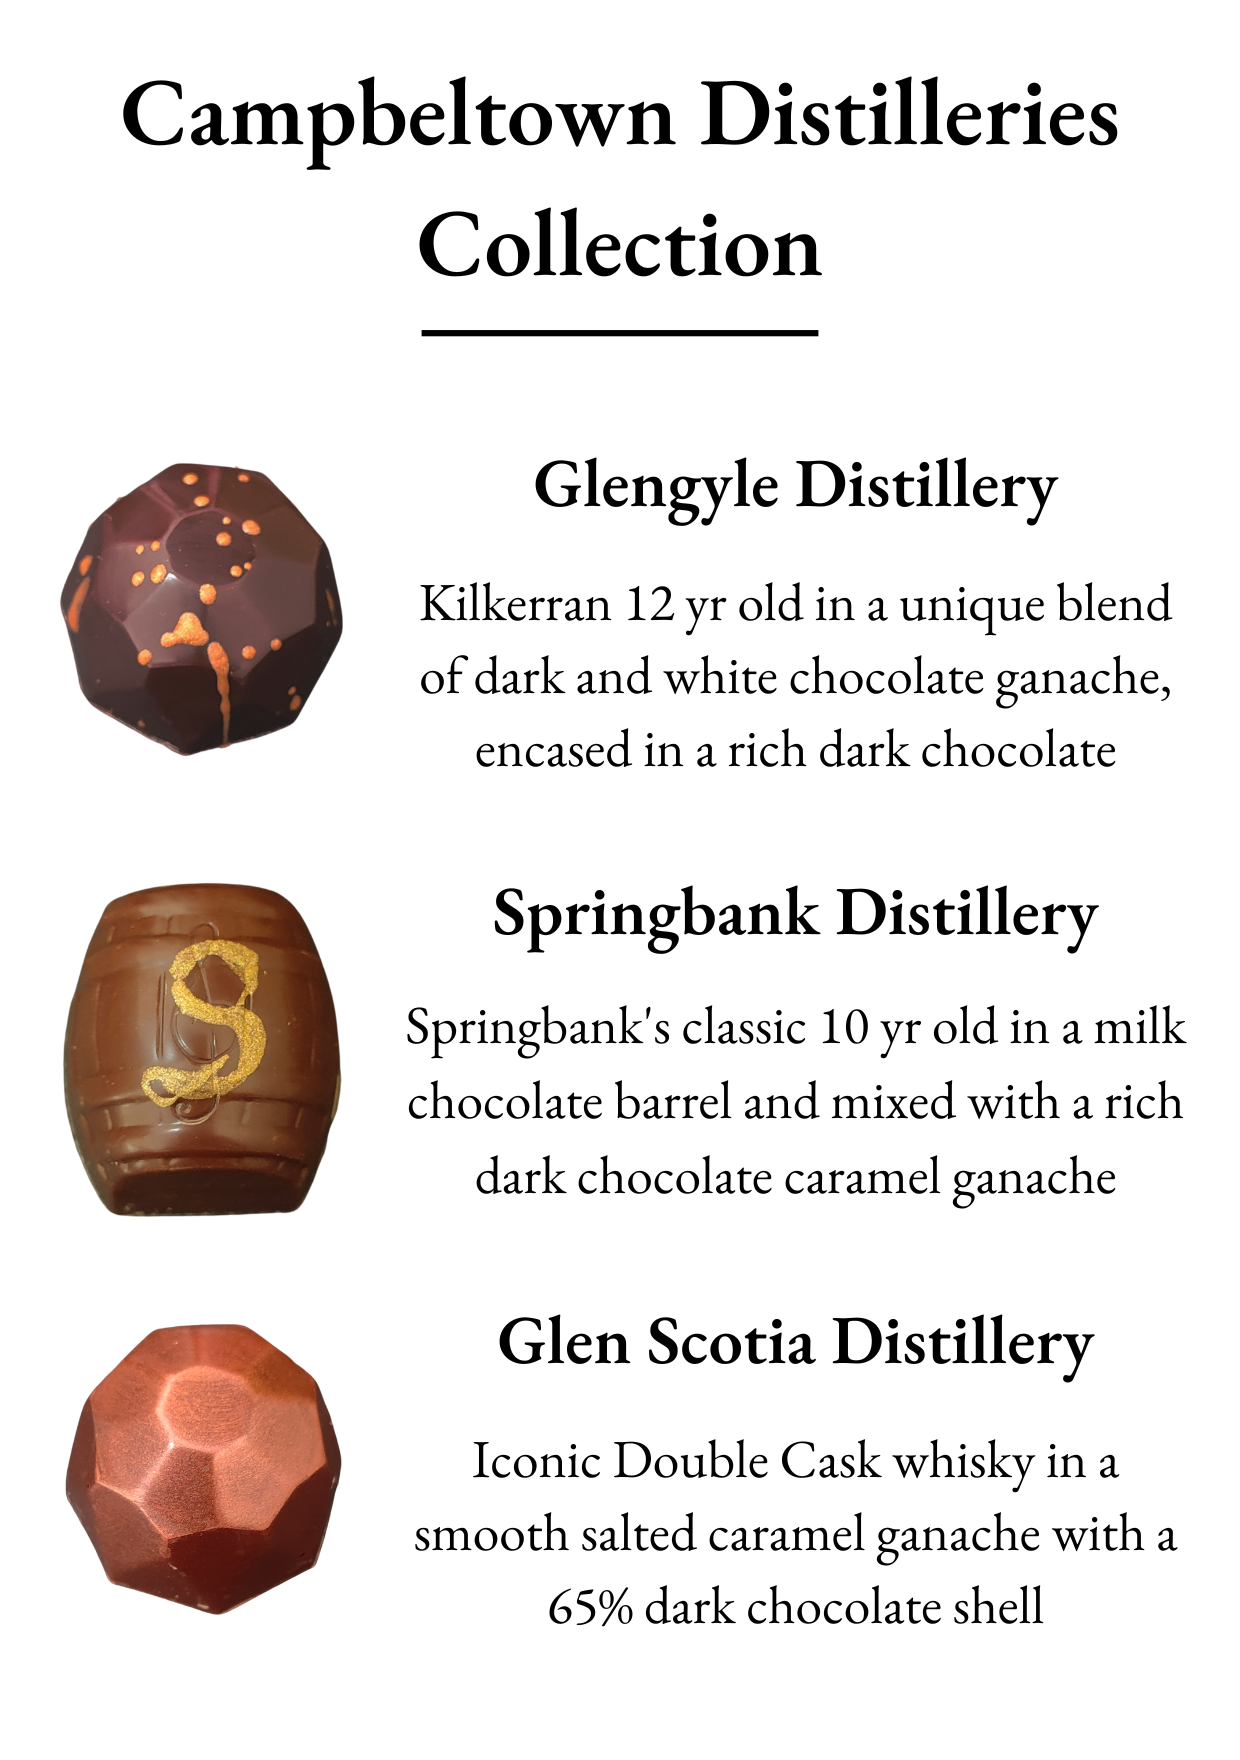 campbeltown distilleries collection flavour card. Kilkerran 12yr old, Springbank 10yr old, Glen Scotia Double Cask